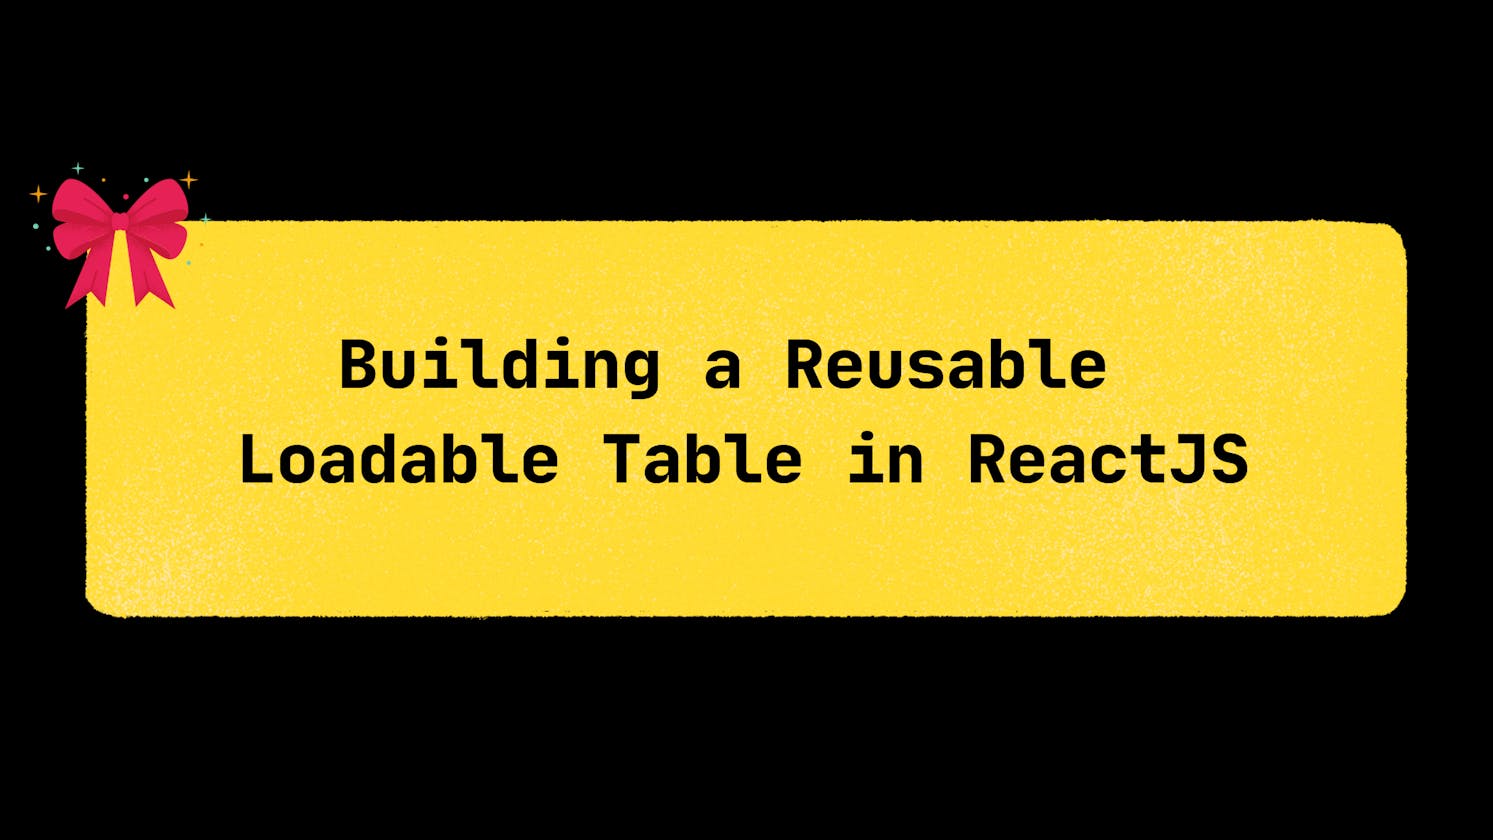 Building a Reusable Loadable Table in ReactJS